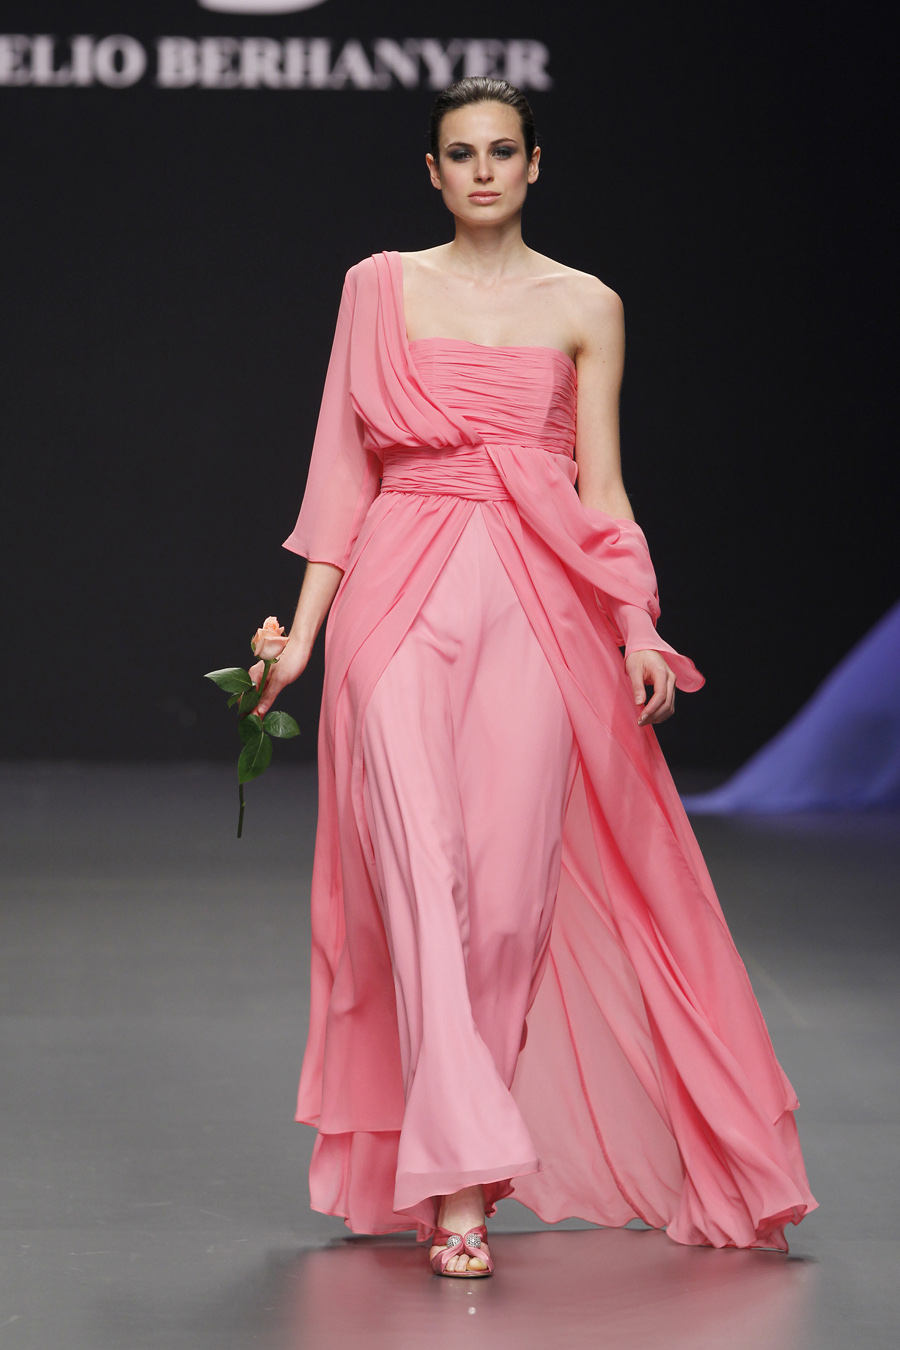 Beautiful Asymetric Pink Wedding dress by Elio Berhanyer Bridal